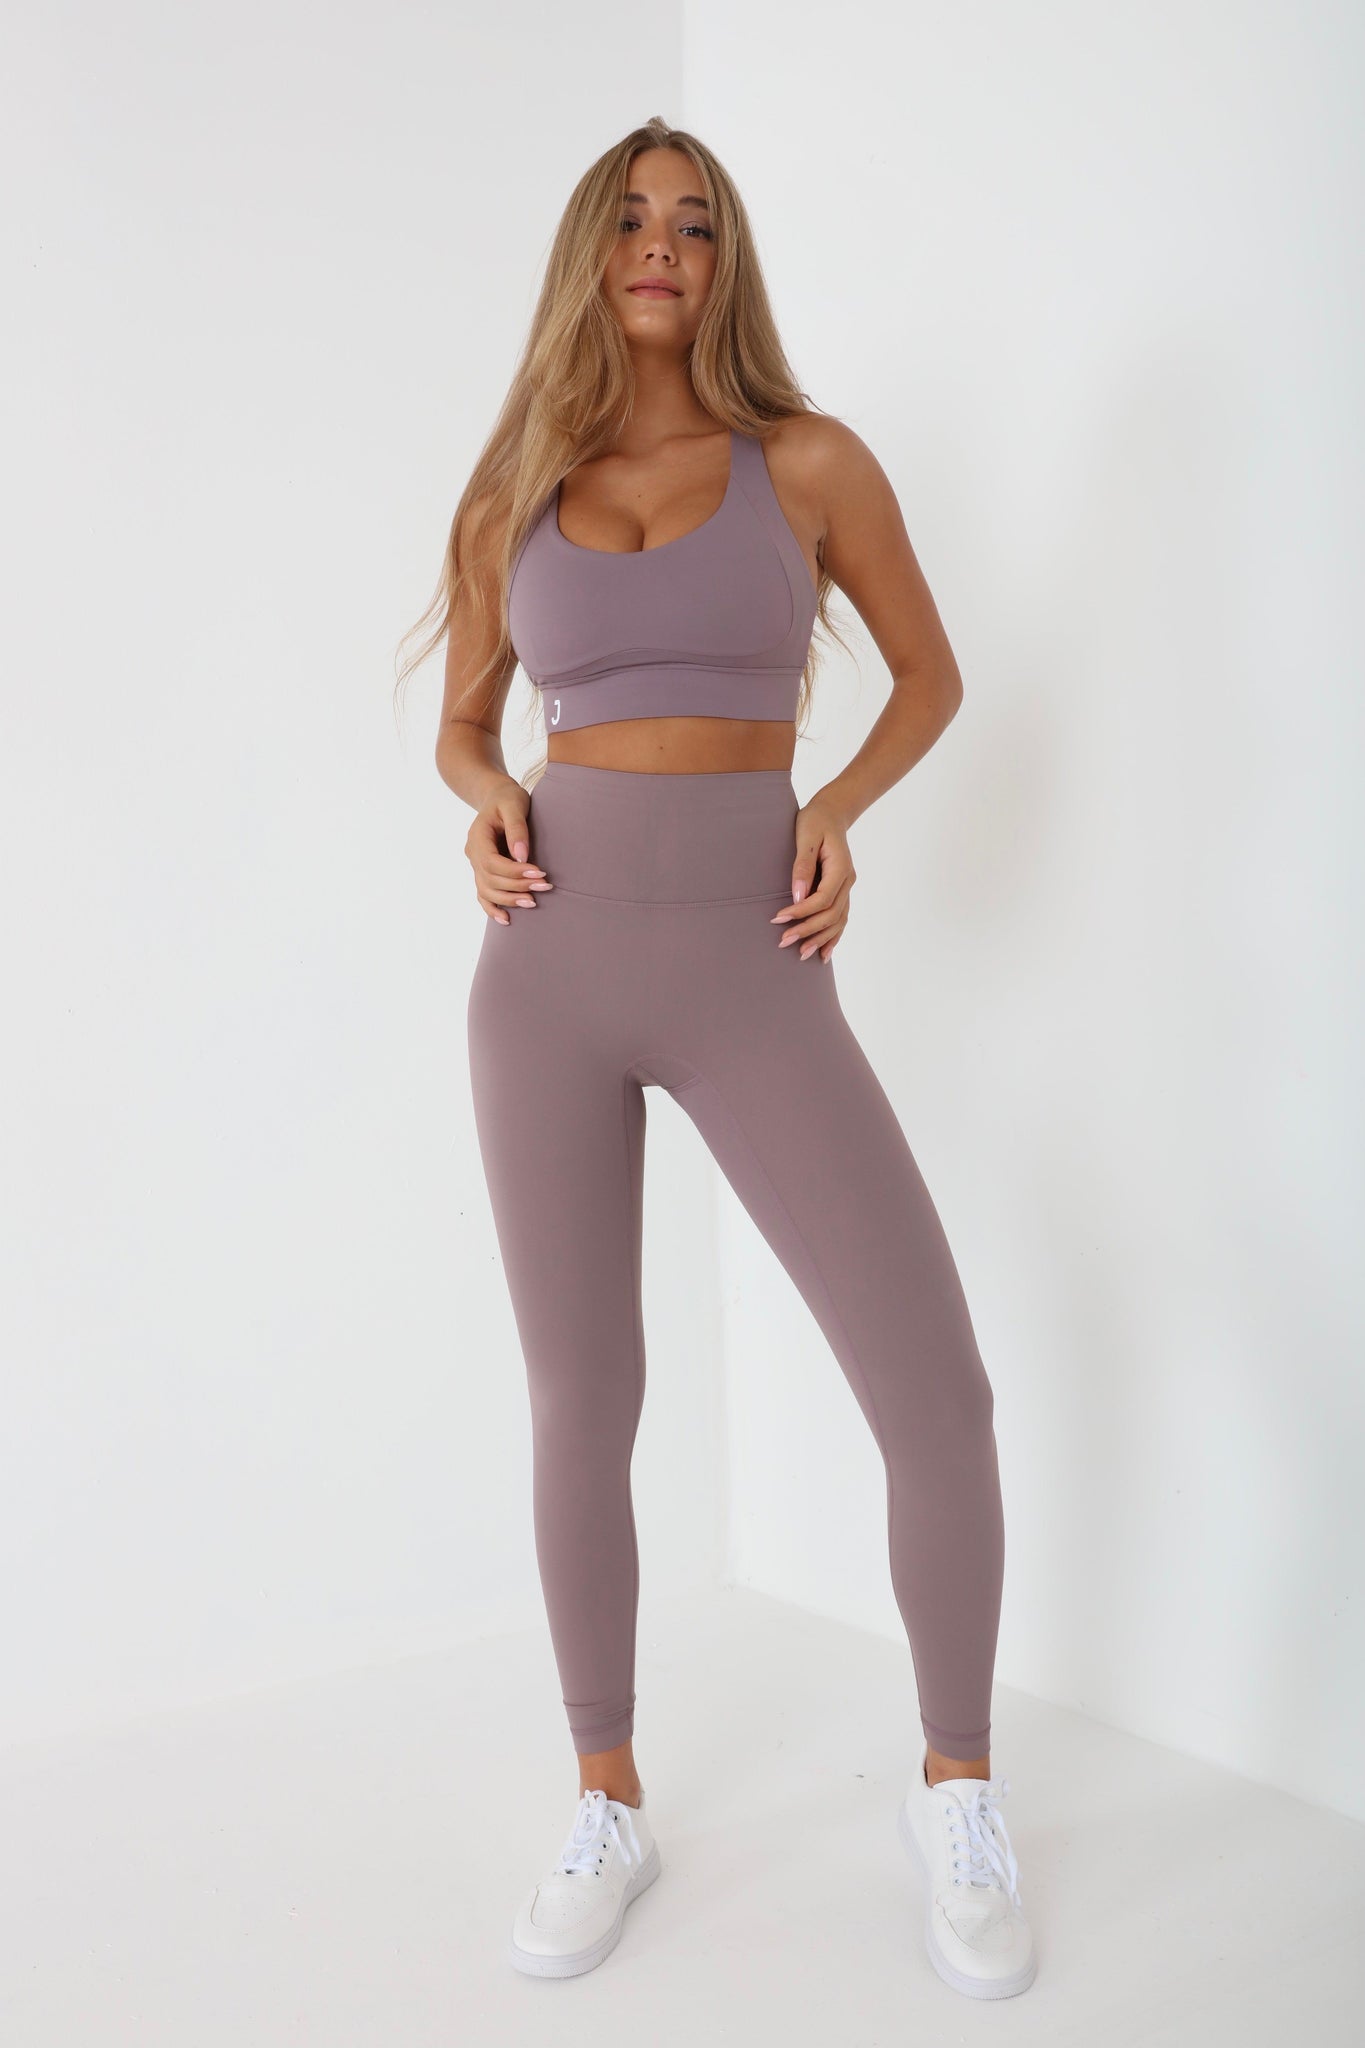 JUV fresh legging in purple color, full body front view.